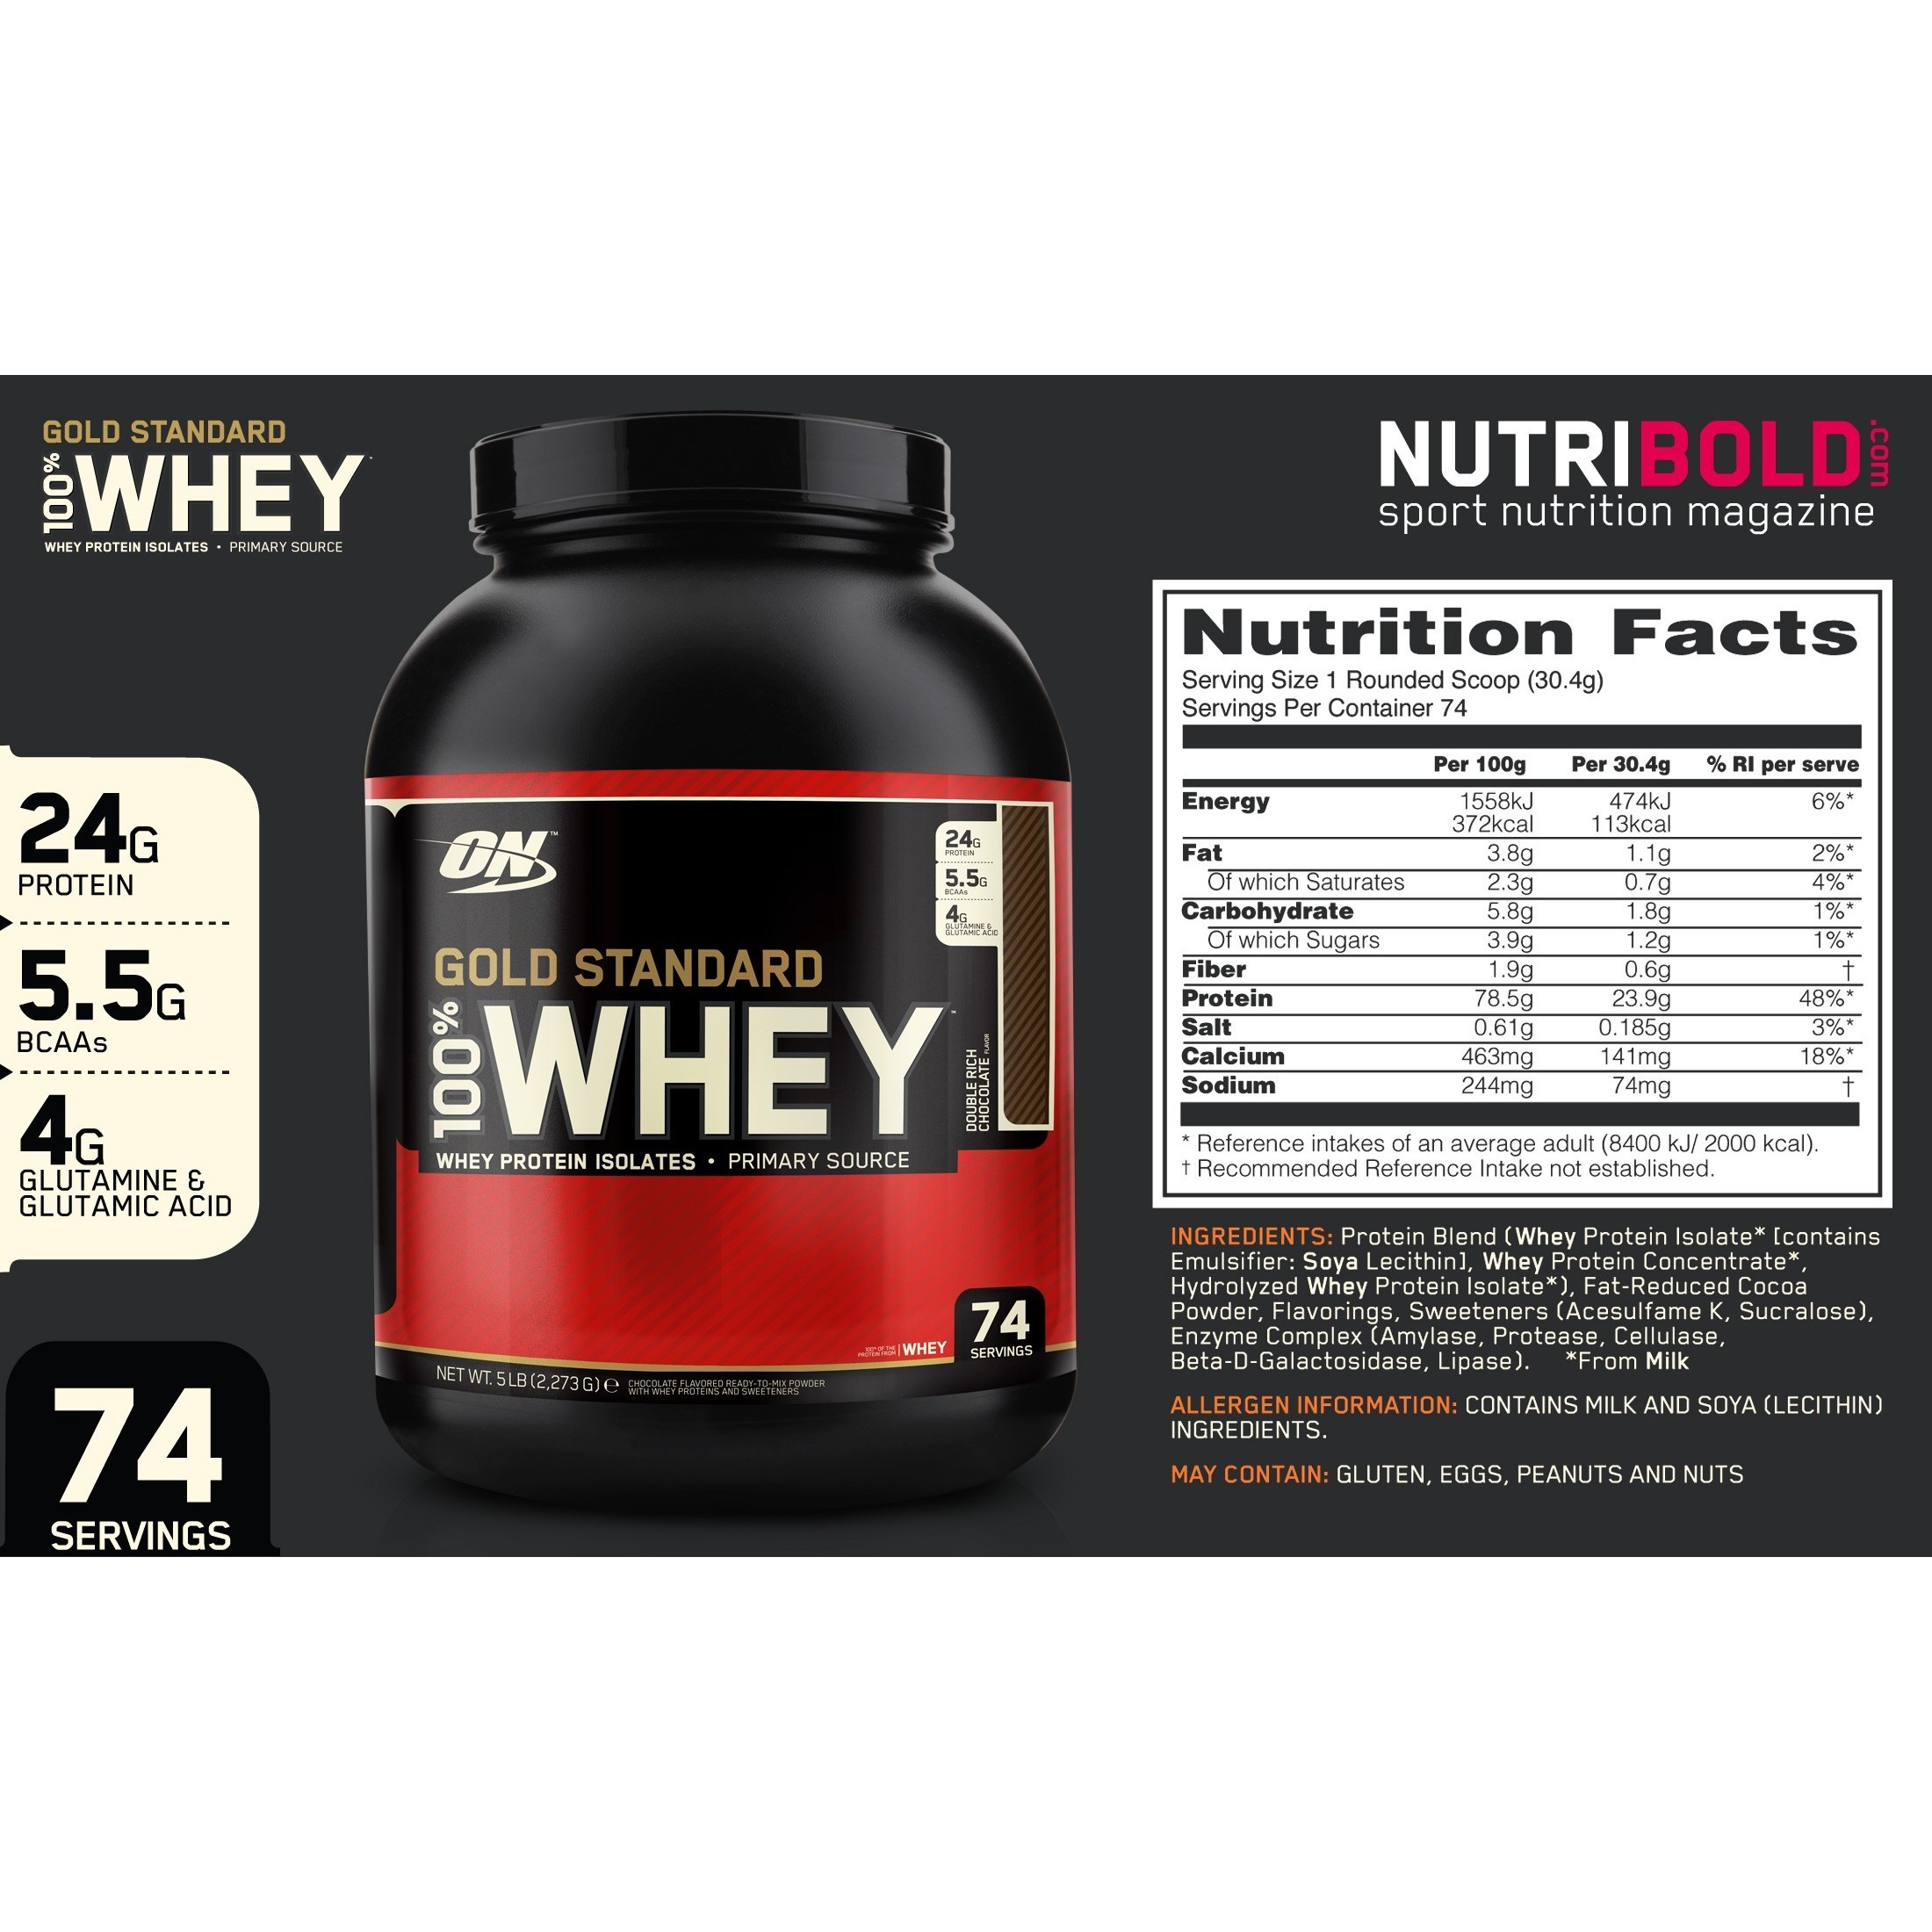 Протеин Optimum Nutrition Gold Standard 100% Whey 3.63 kg